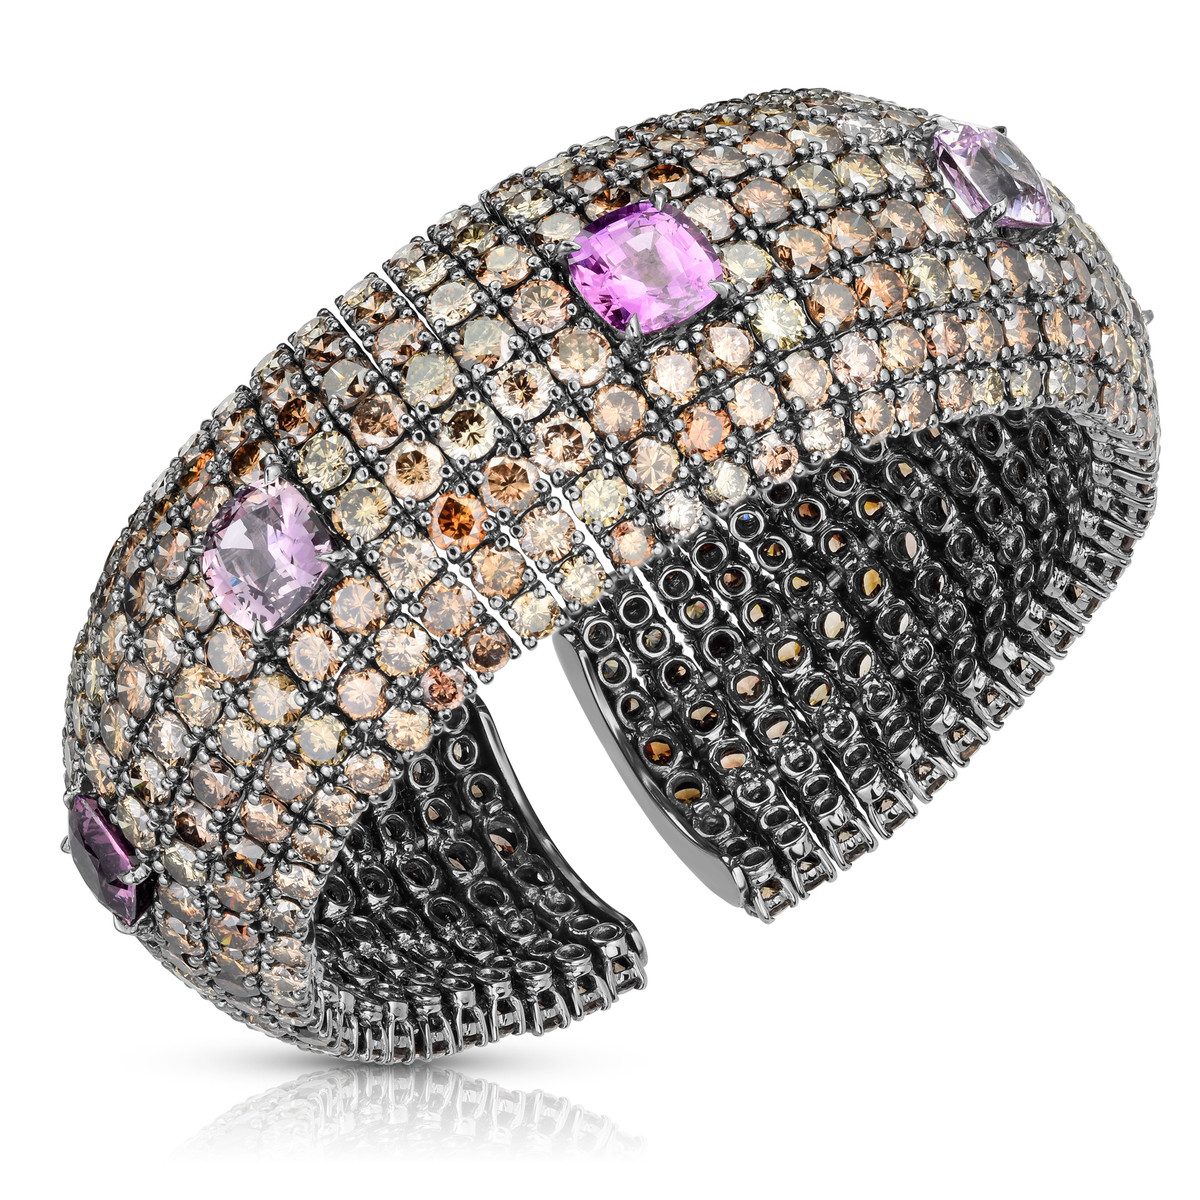 Hyde Park Collection 18K White Gold Diamond & Sapphire Cuff Bracelet-54453 Product Image